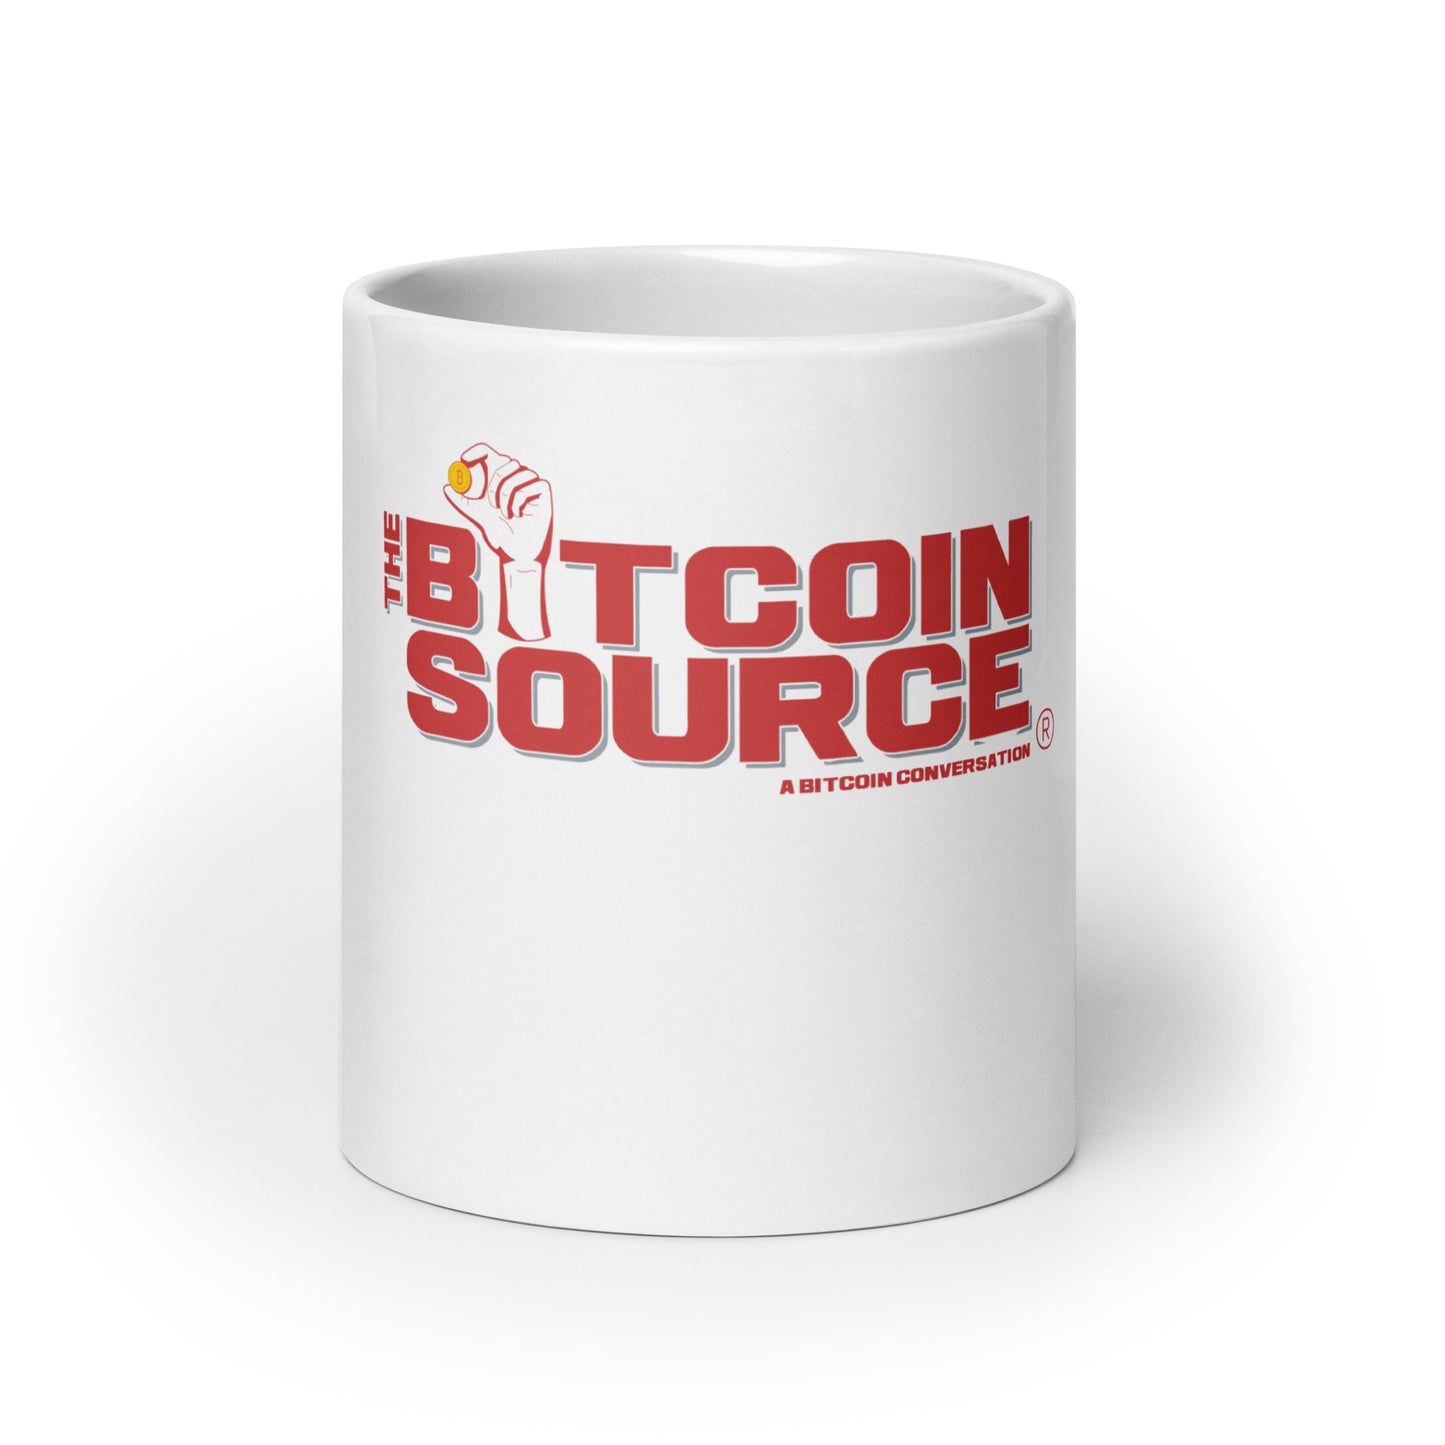 The Bitcoin Source Mug